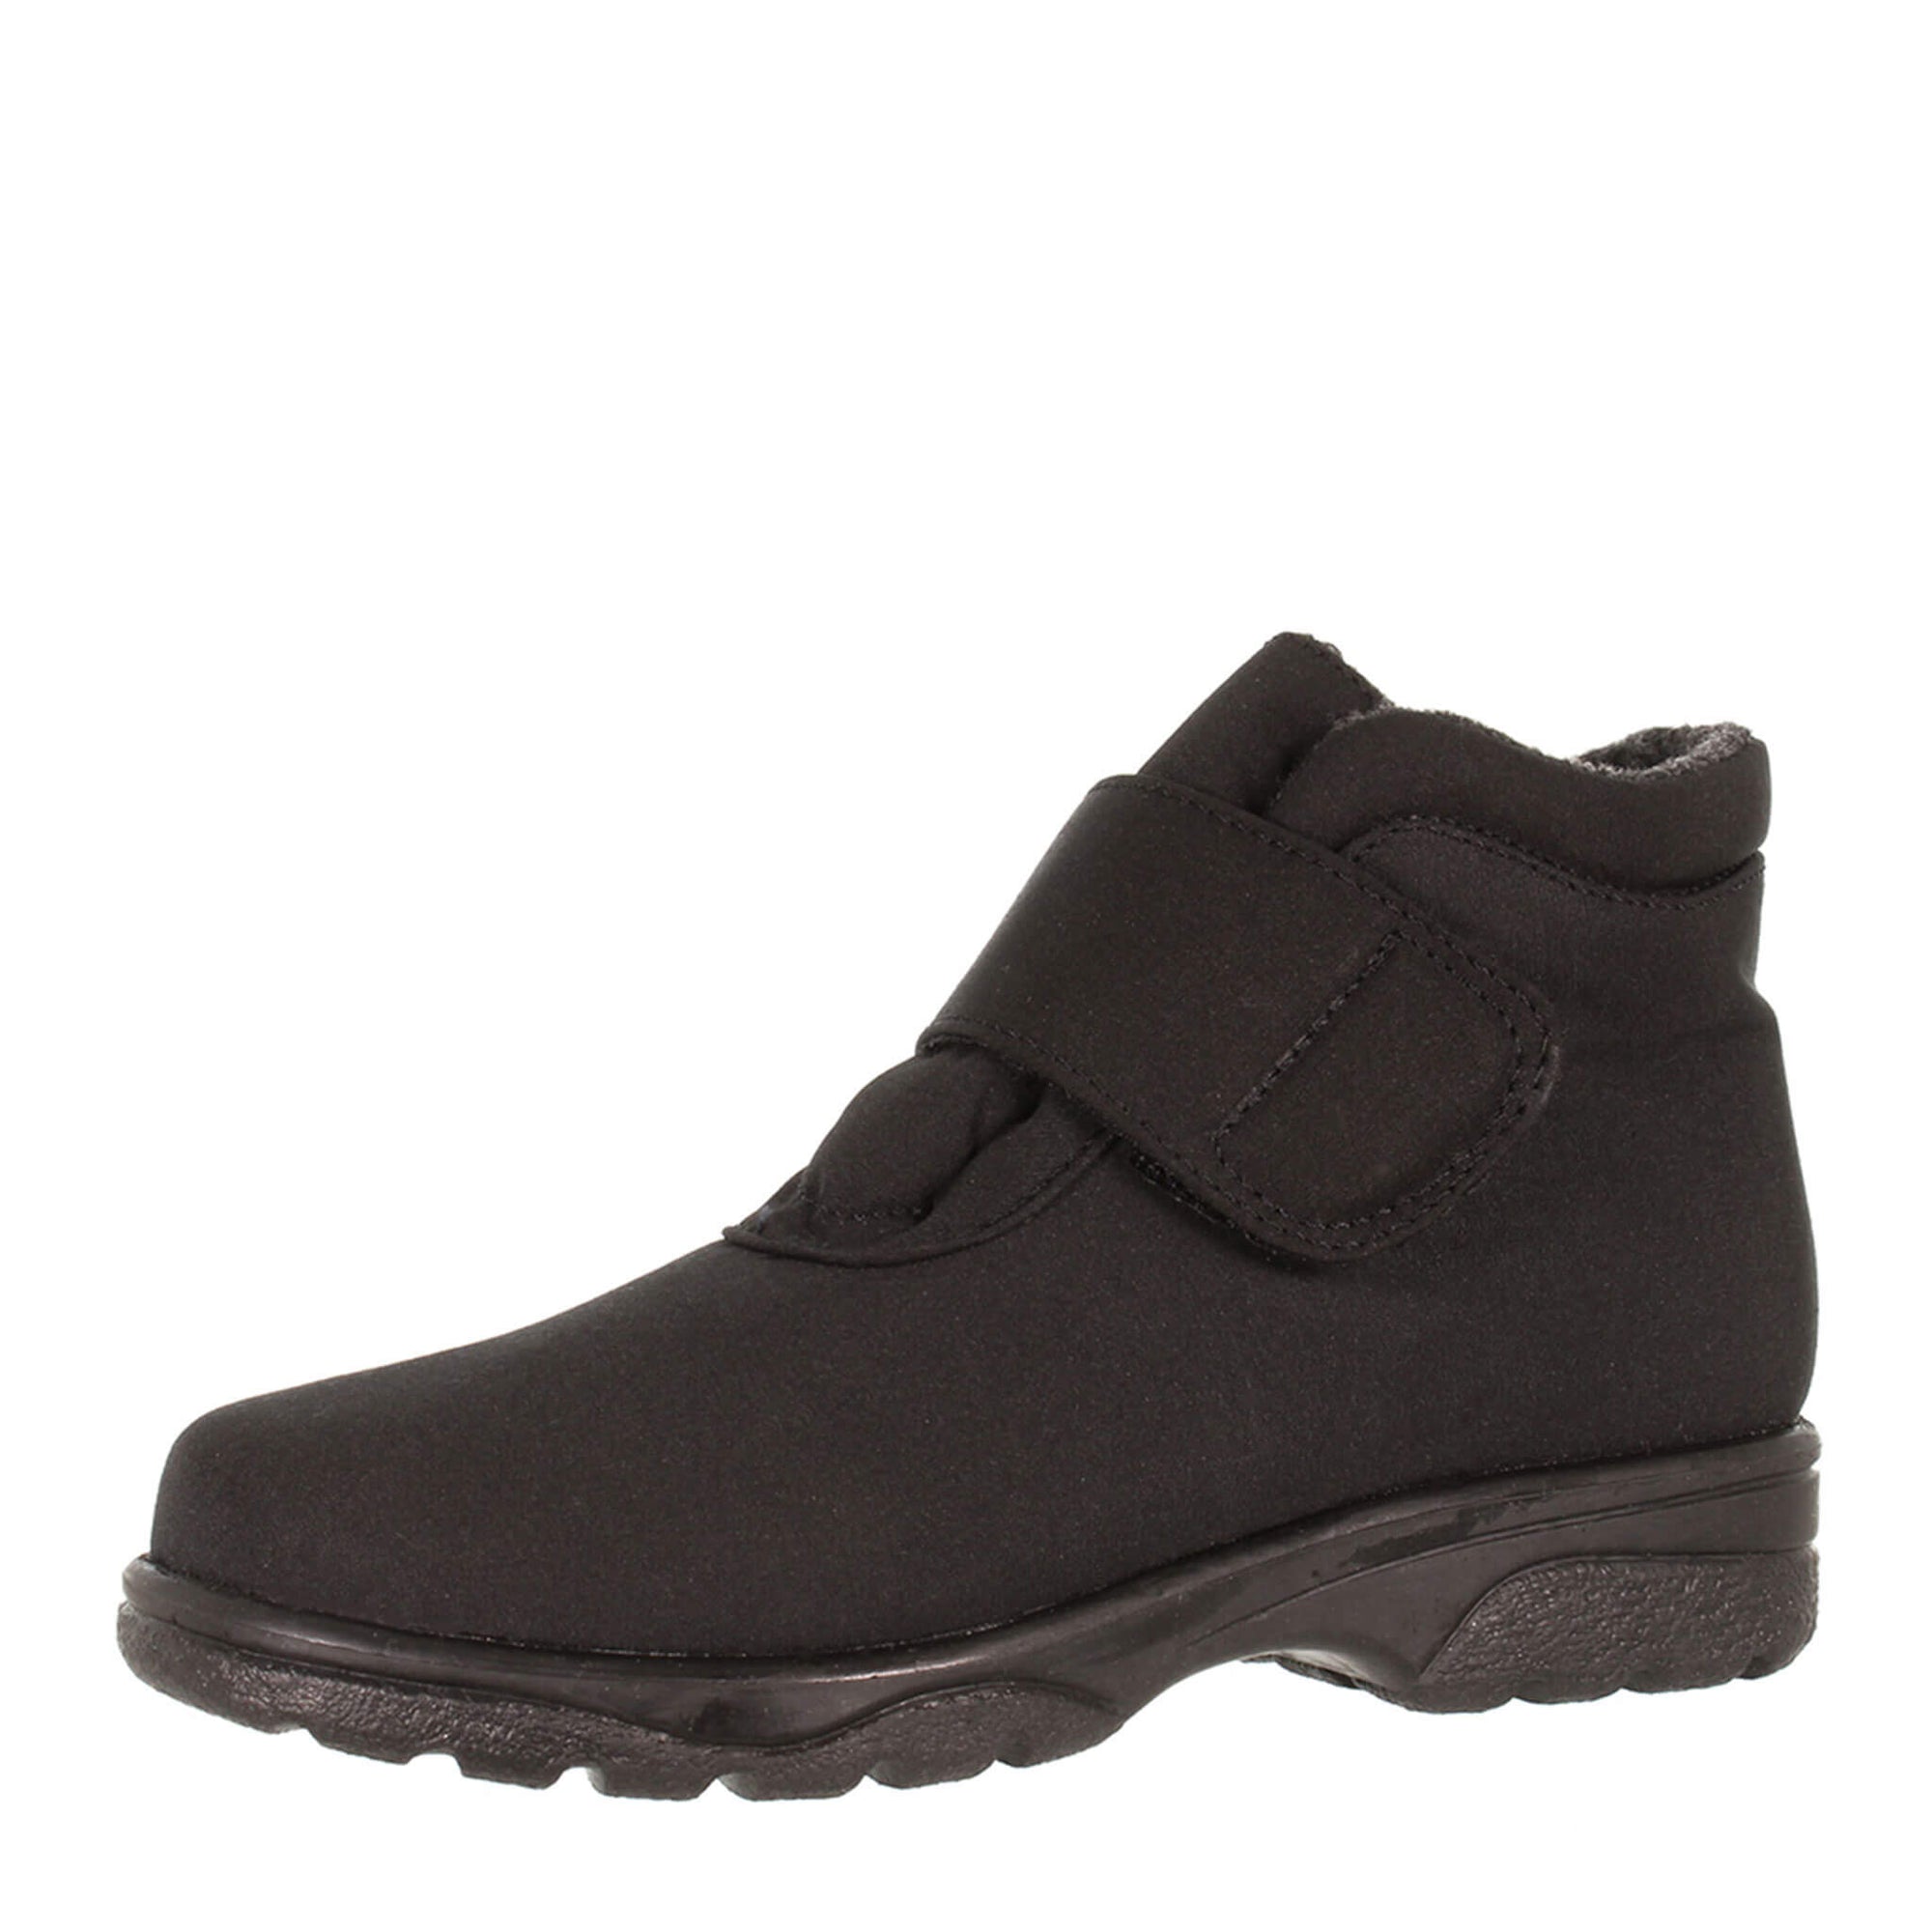 Active winter boot for women - Black